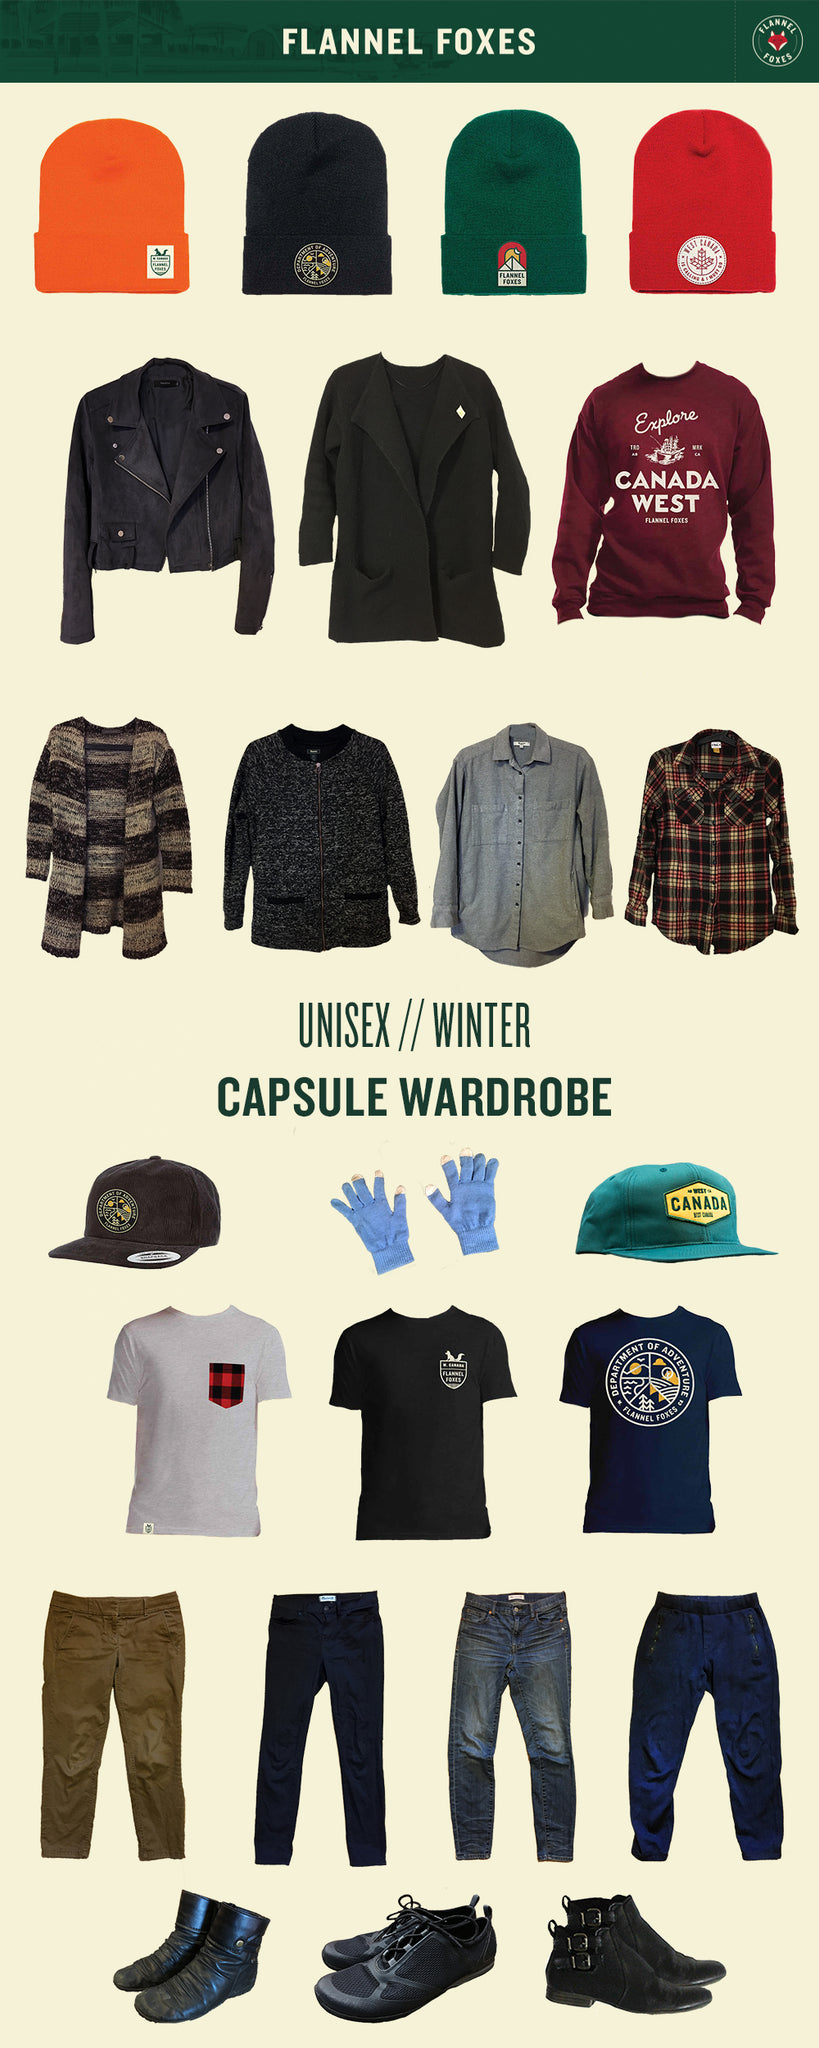 Unisex Winter Capsule Wardrobe